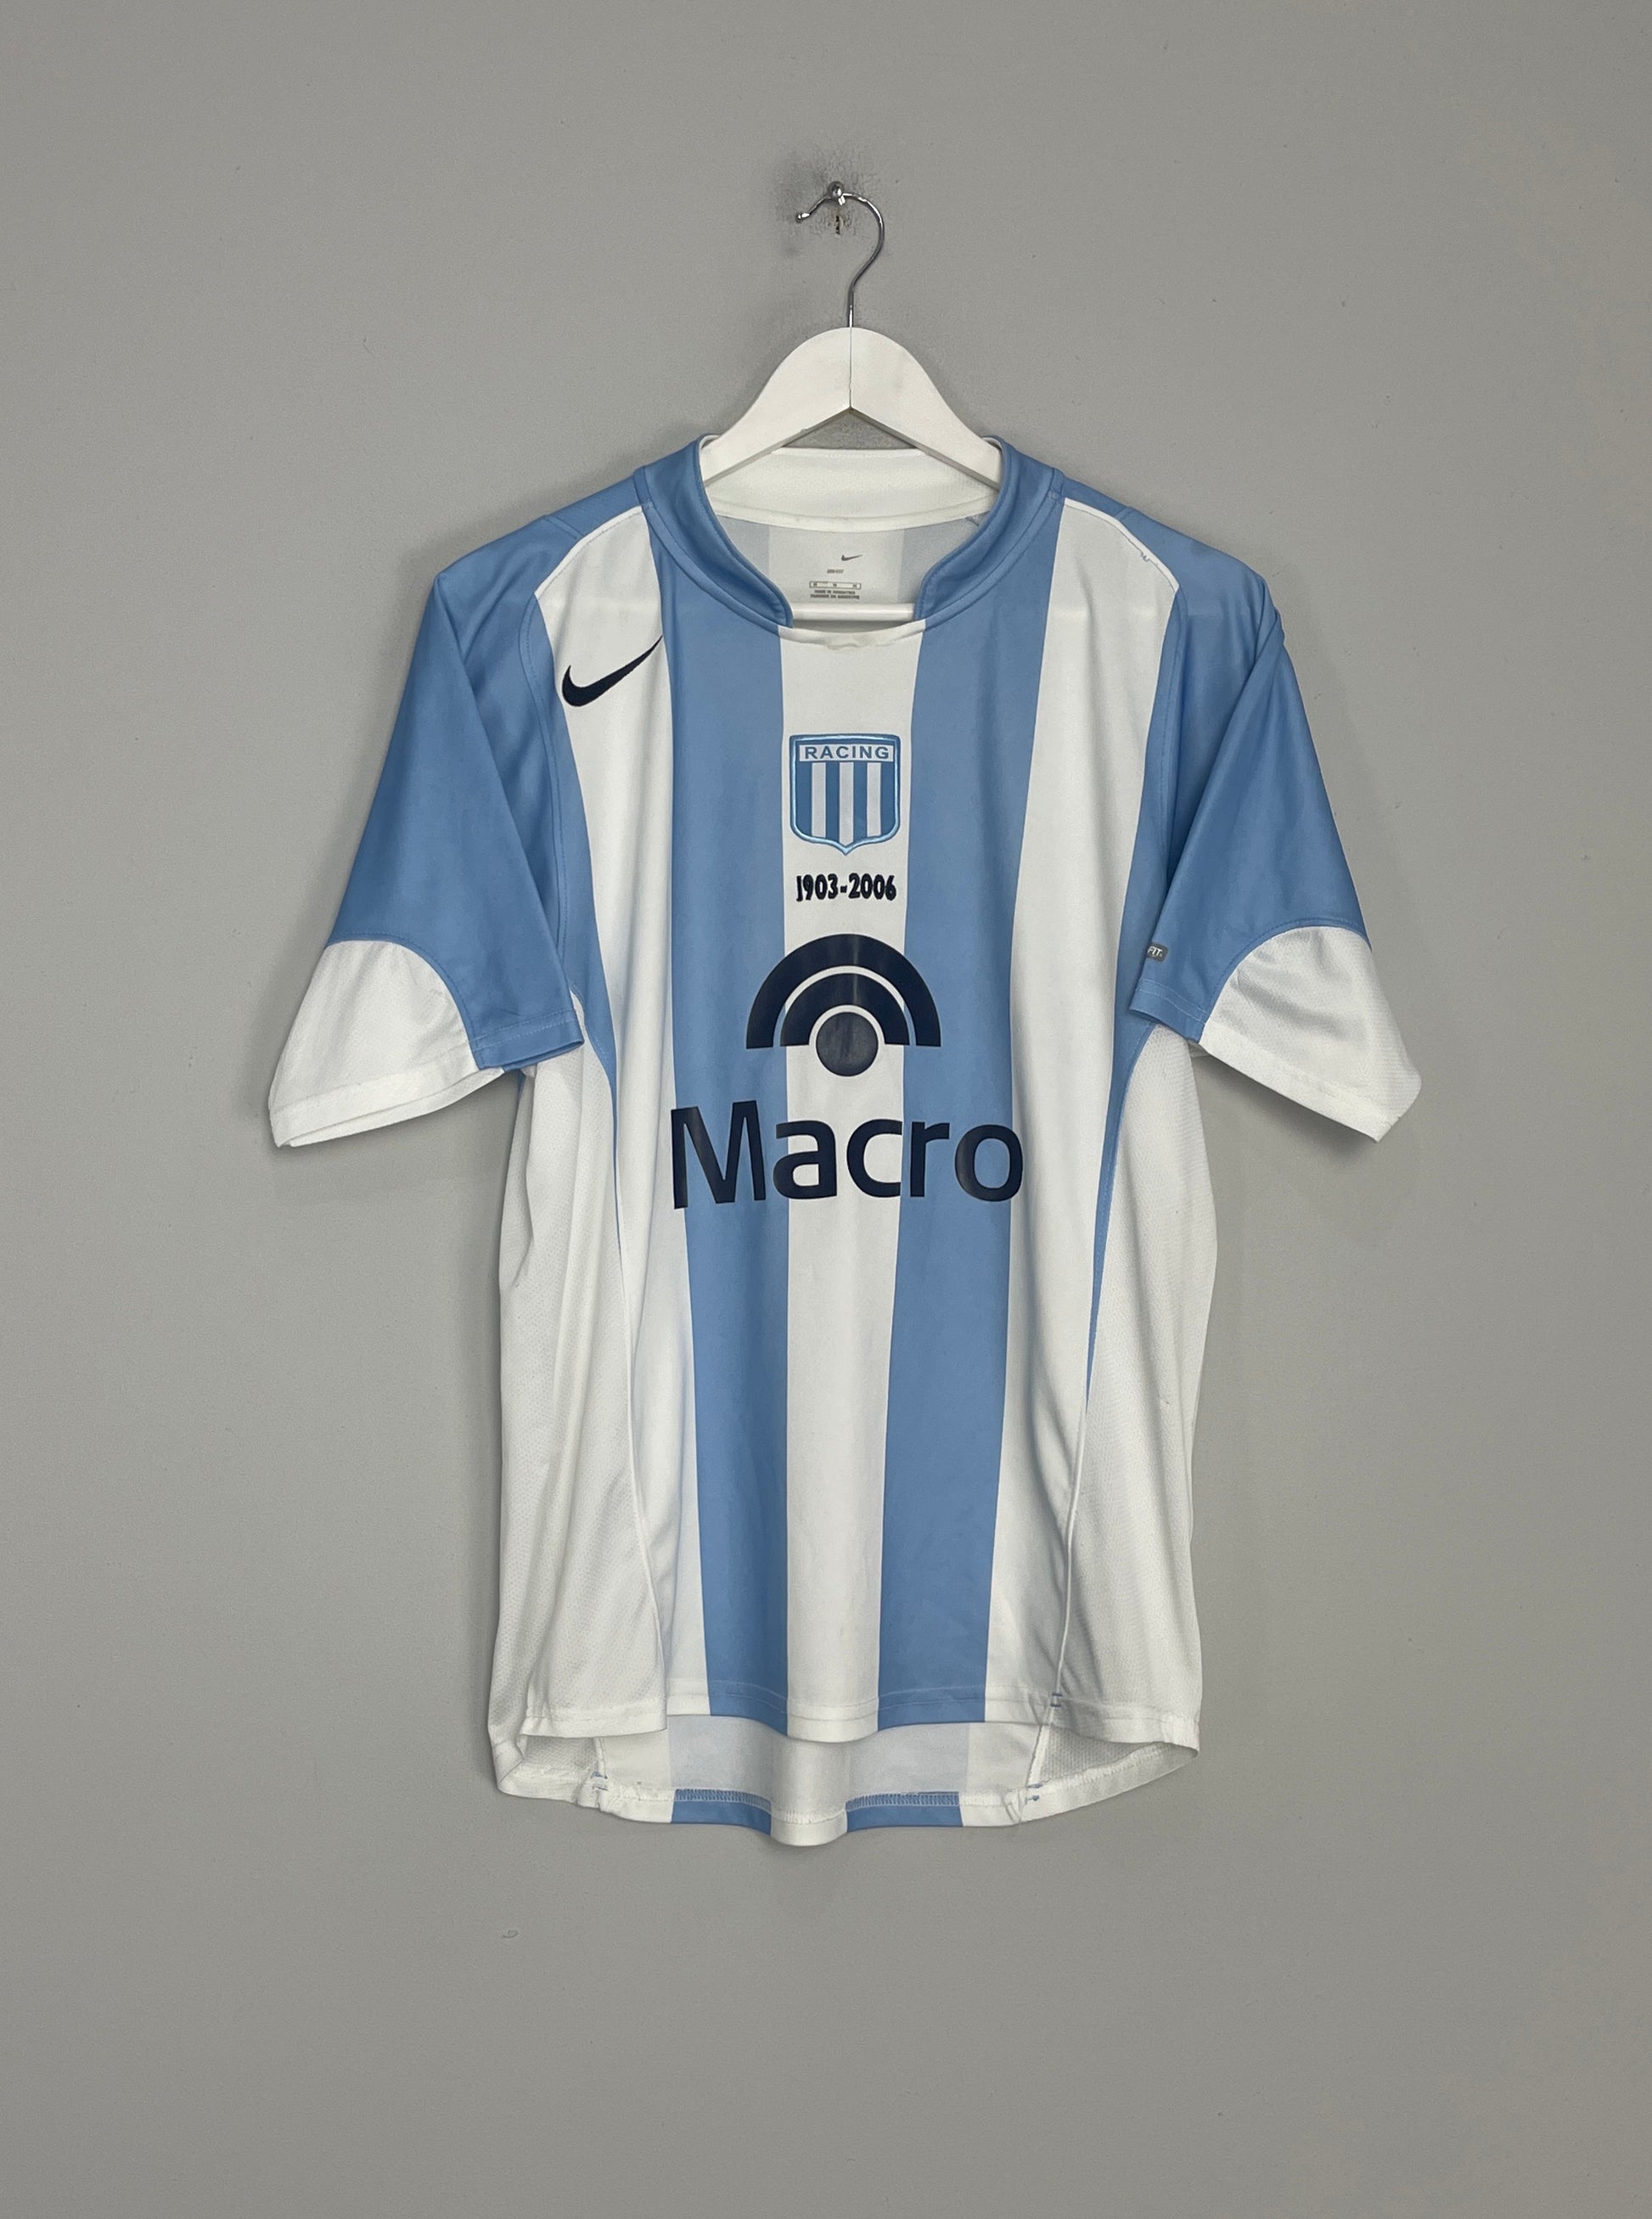 Racing Club de Ferrol 2005-06 Home Kit